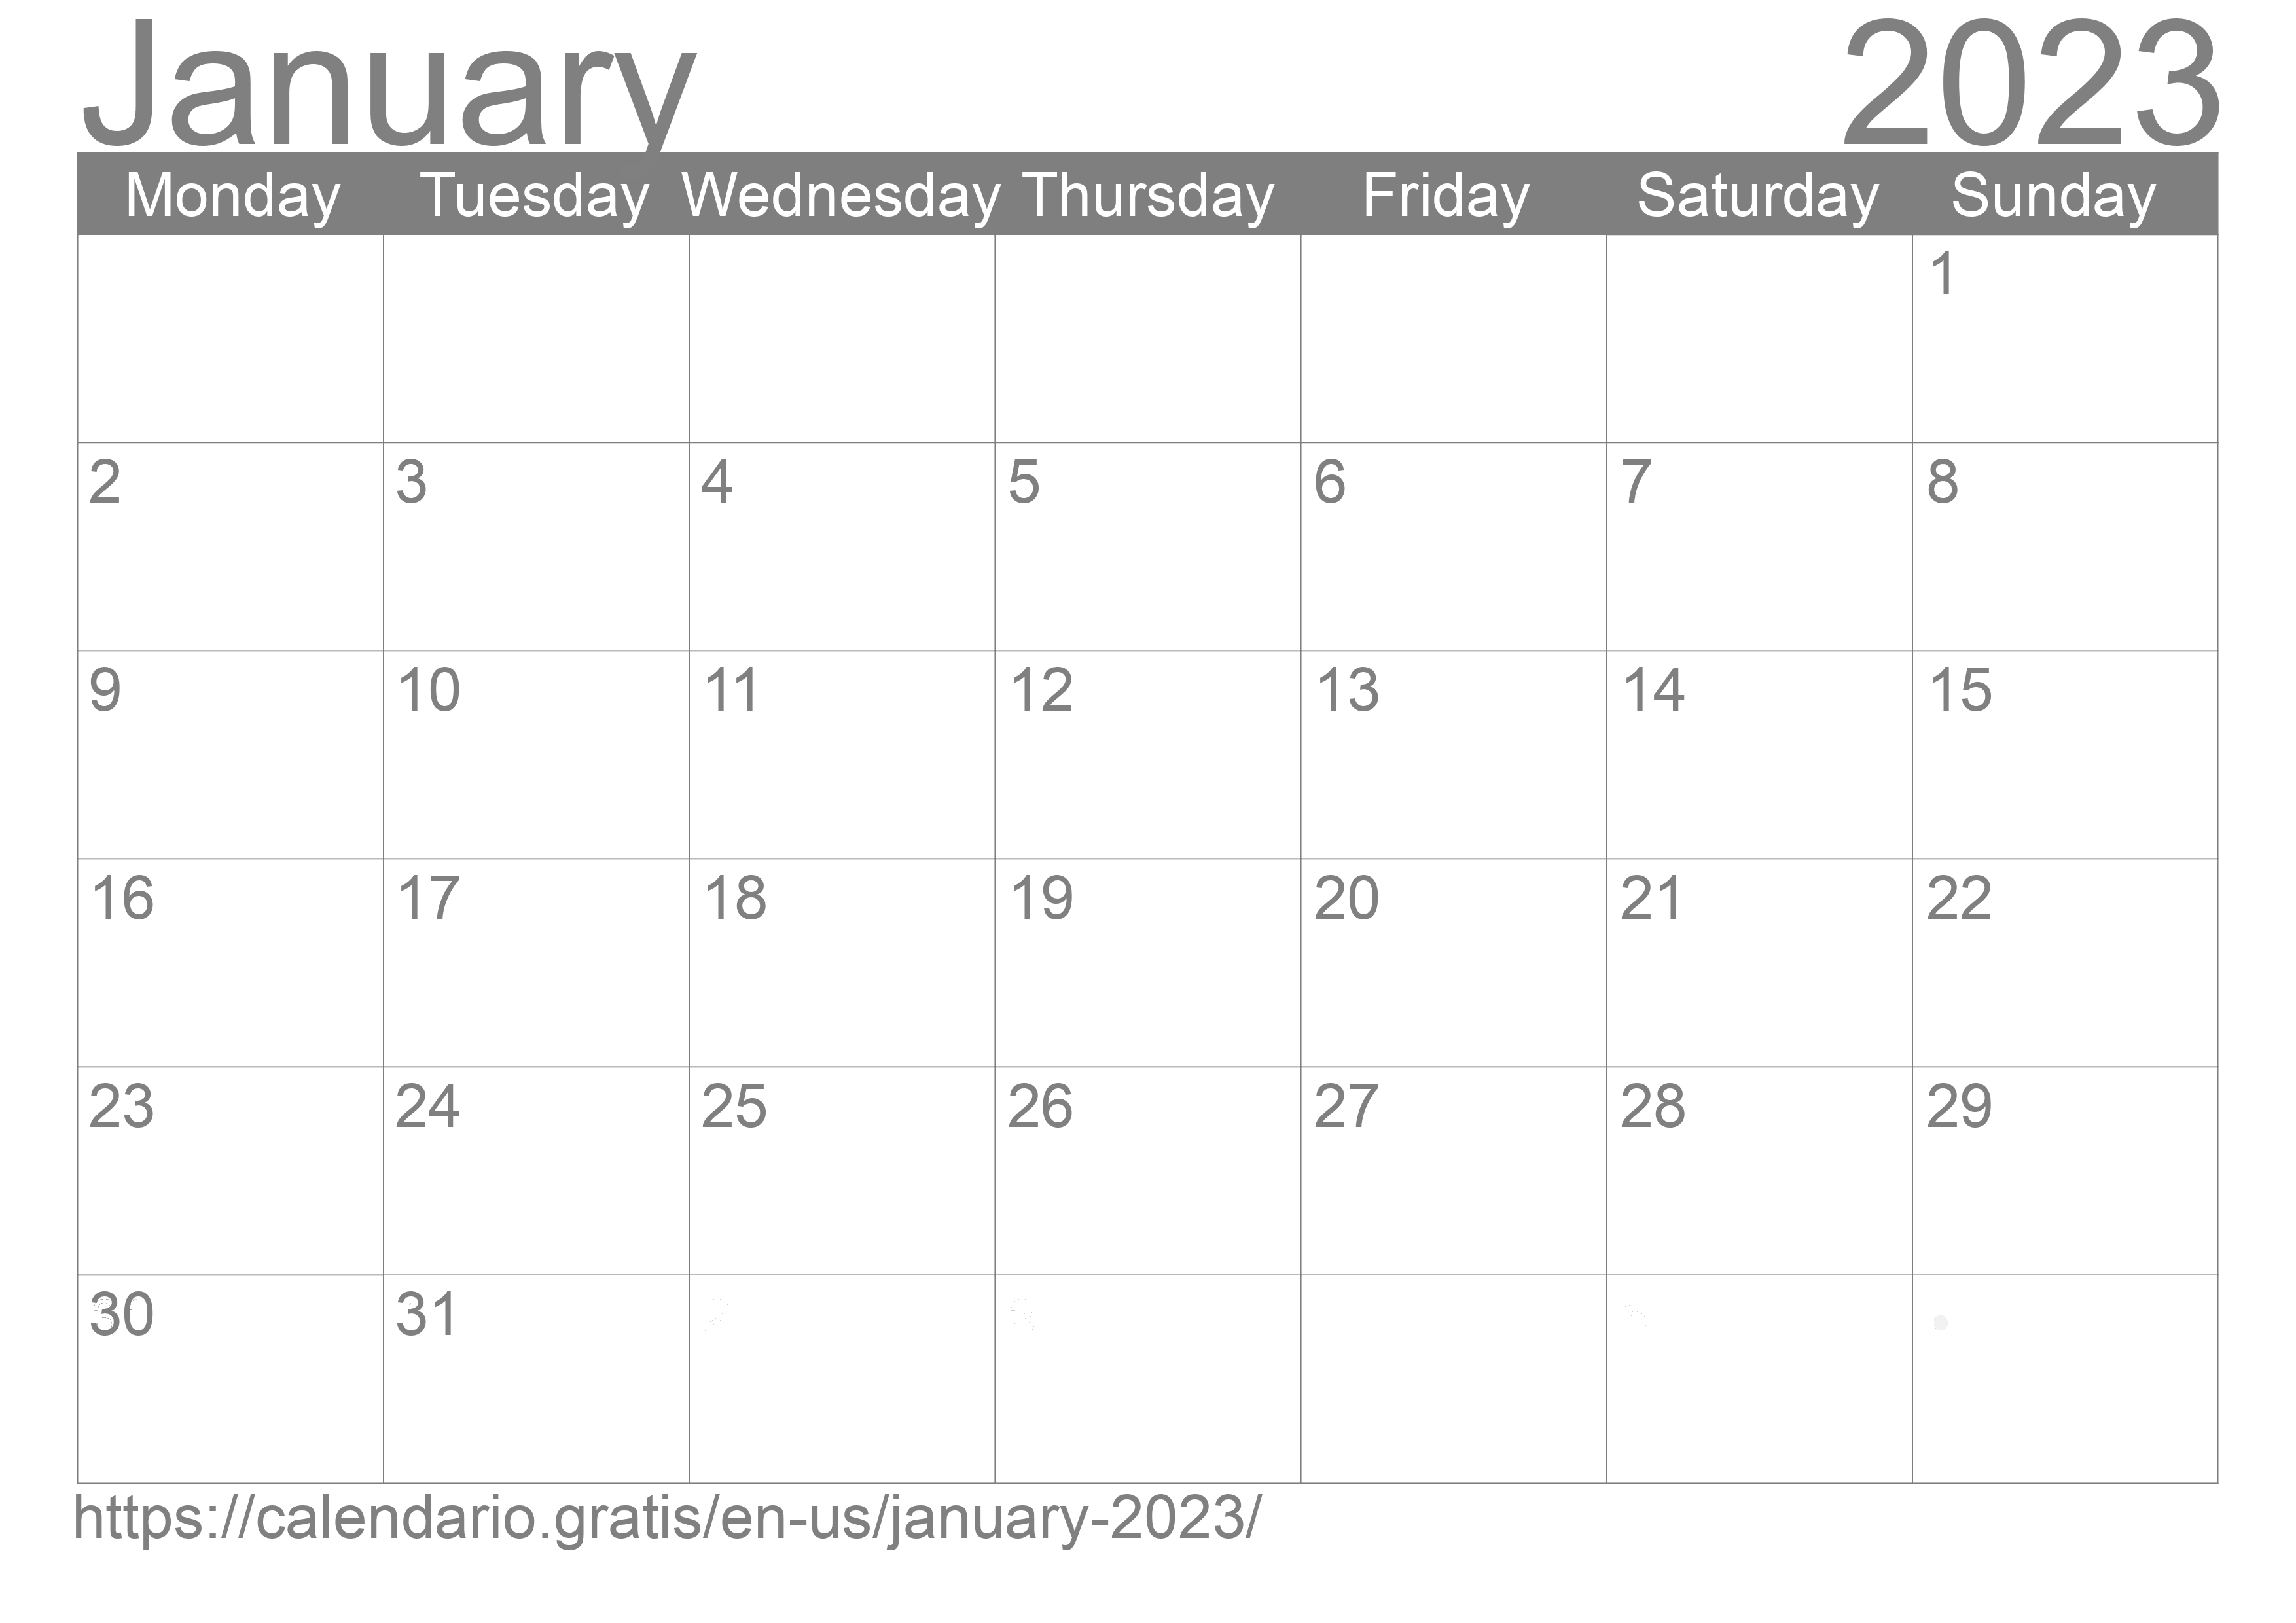 calendar-january-2023-from-united-states-of-america-in-english-calendario-gratis